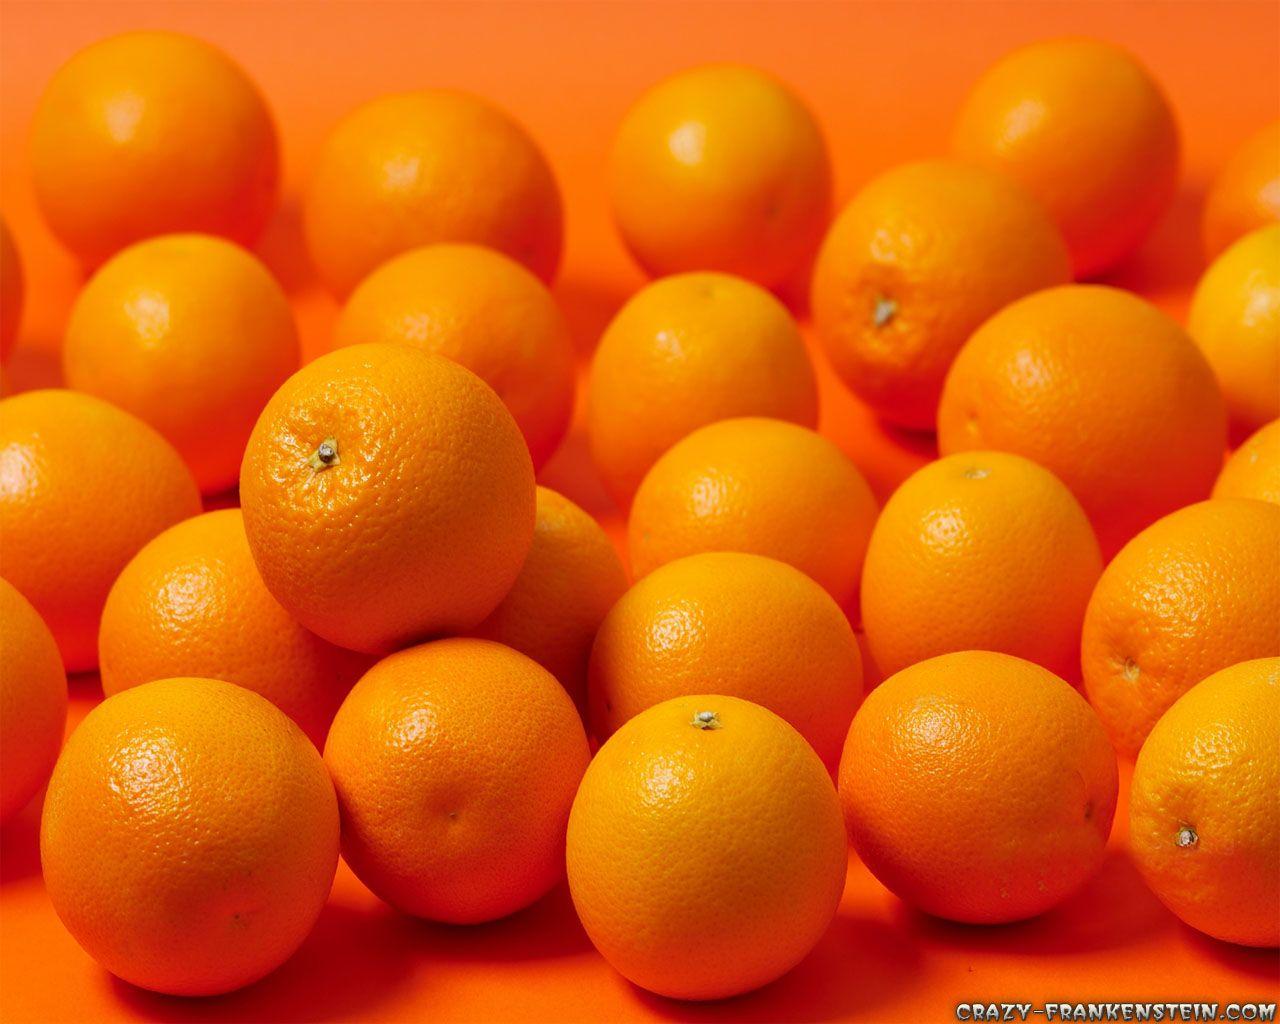 Orange Fruit Wallpaper, Adorable 45 Orange Fruit Image HQFX